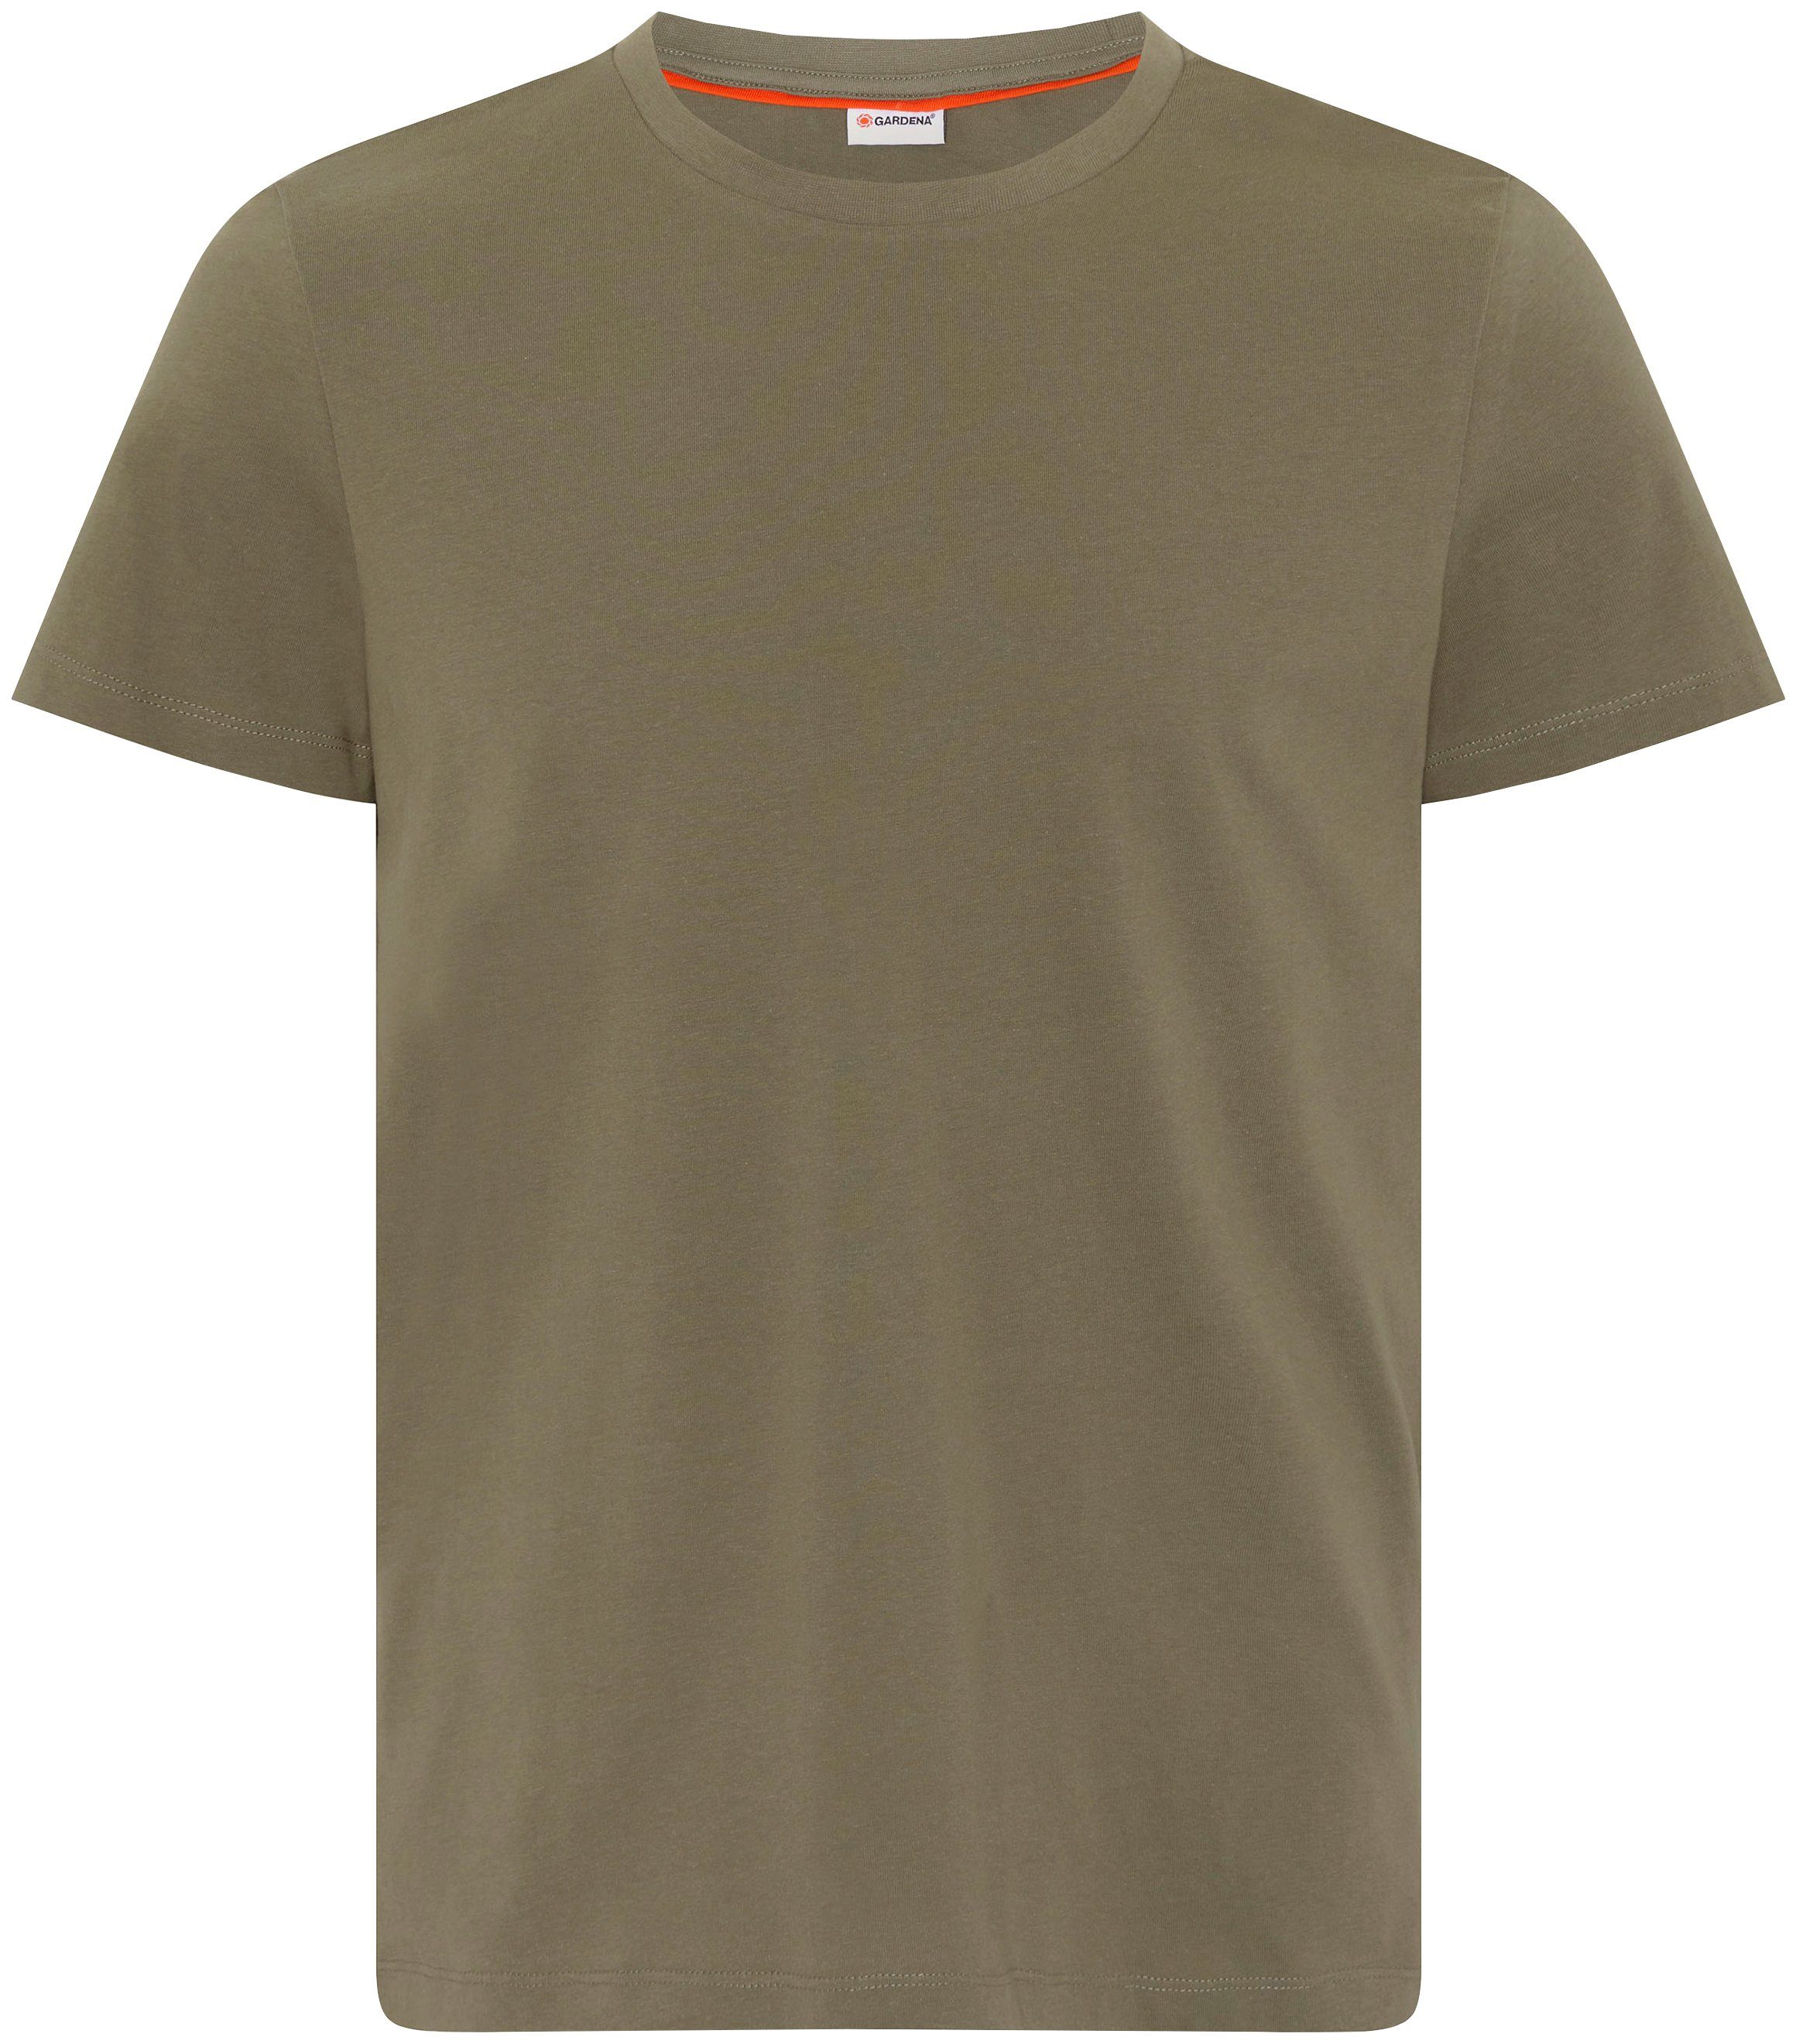 GARDENA T-Shirt Dusty Olive unifarben